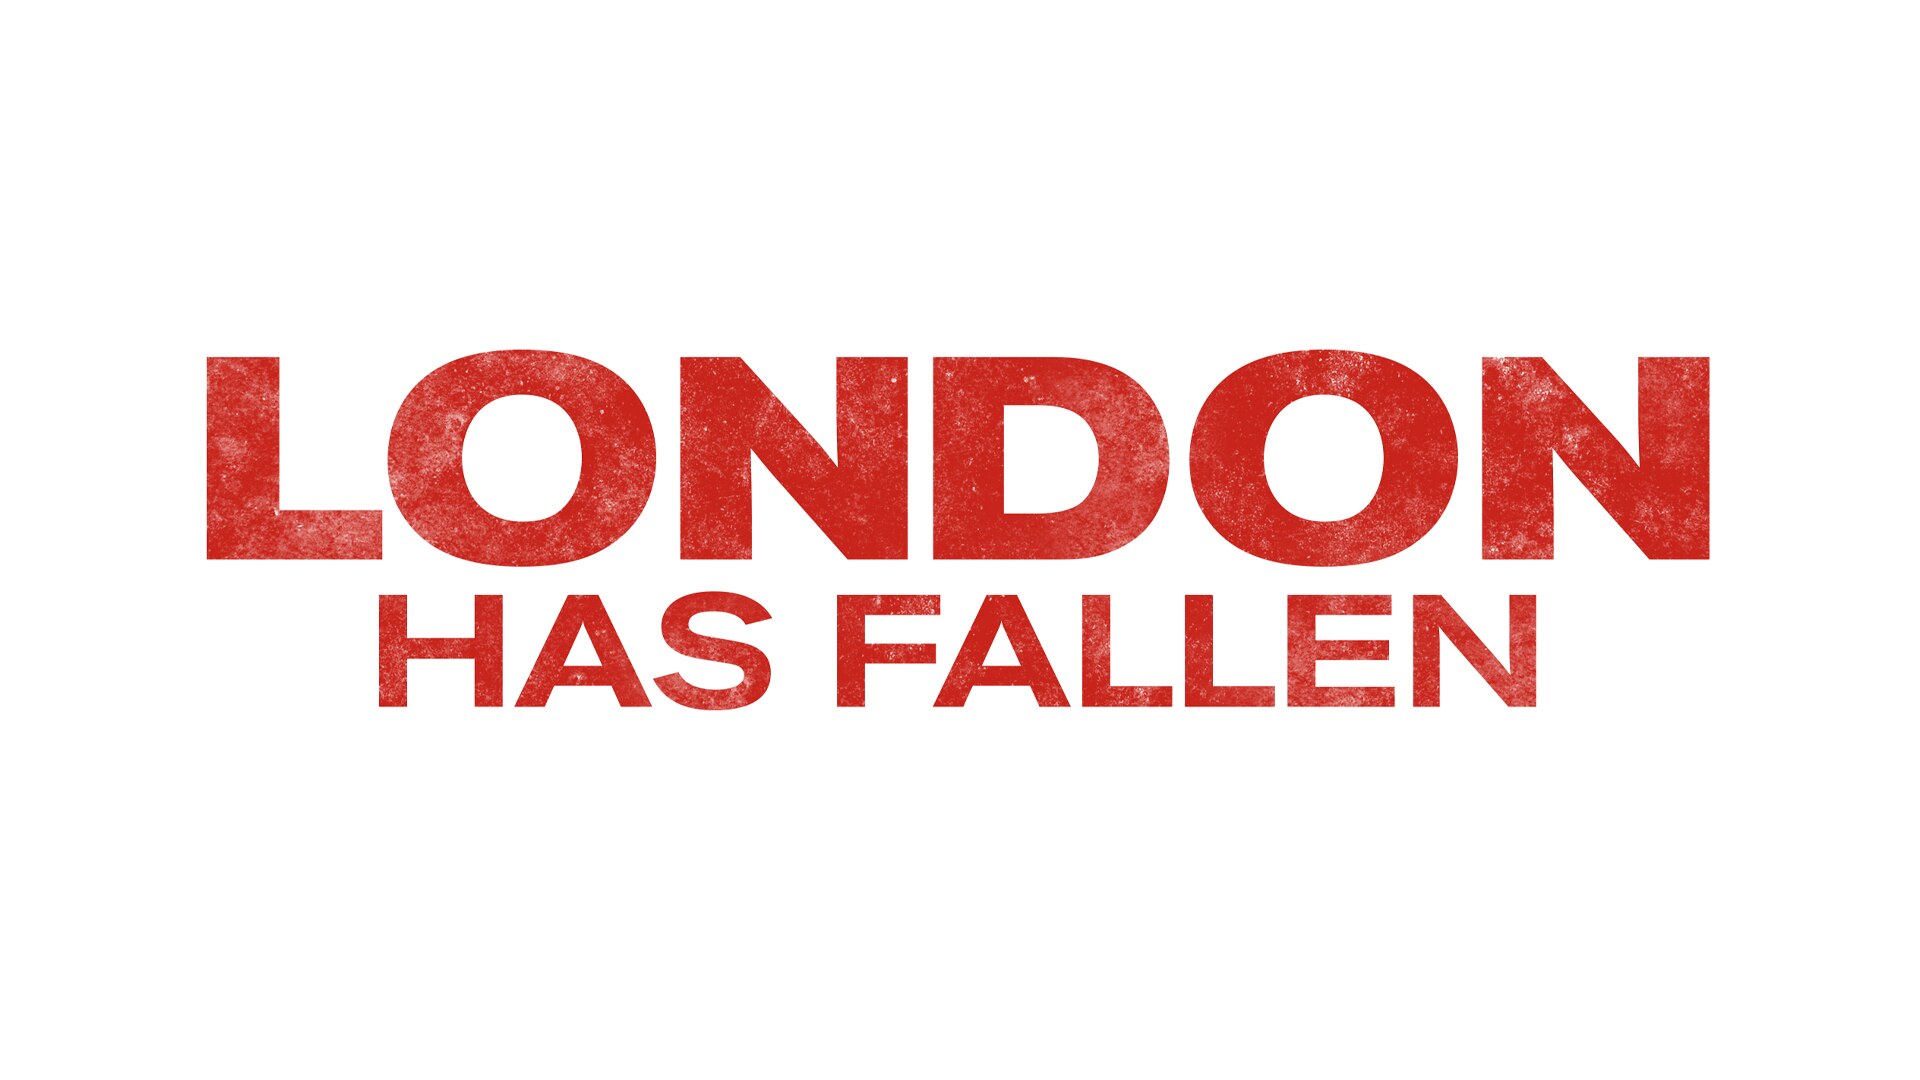 London Has Fallen - USANetwork.com